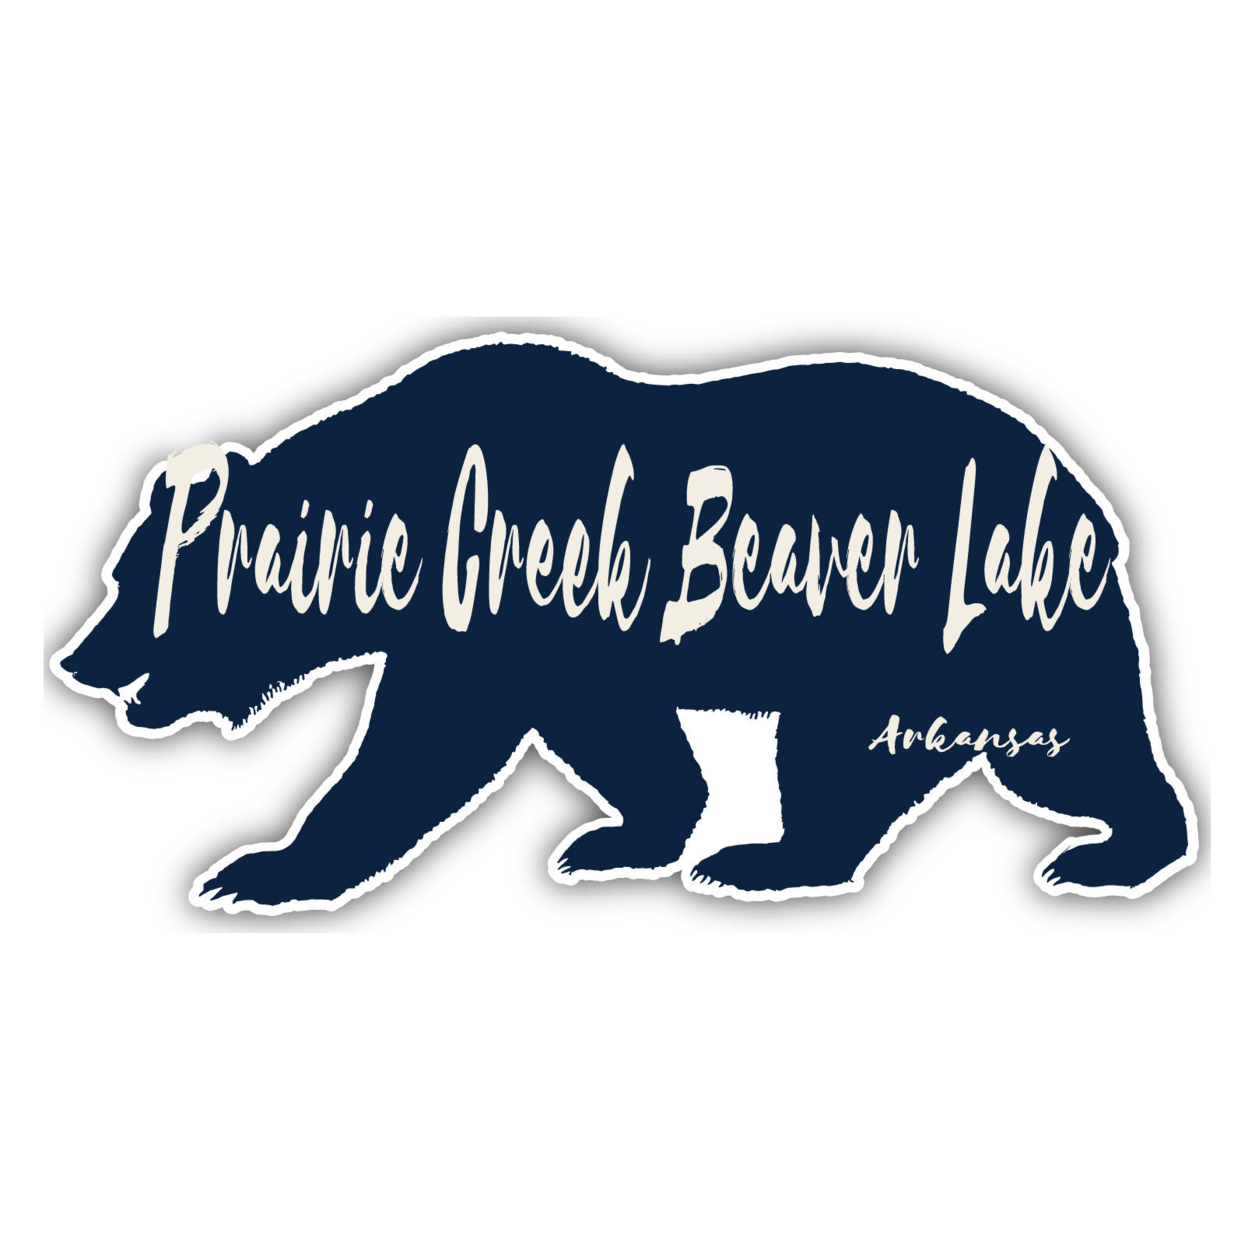 Prairie Creek Beaver Lake Arkansas Souvenir Decorative Stickers (Choose Theme And Size) - Single Unit, 2-Inch, Bear